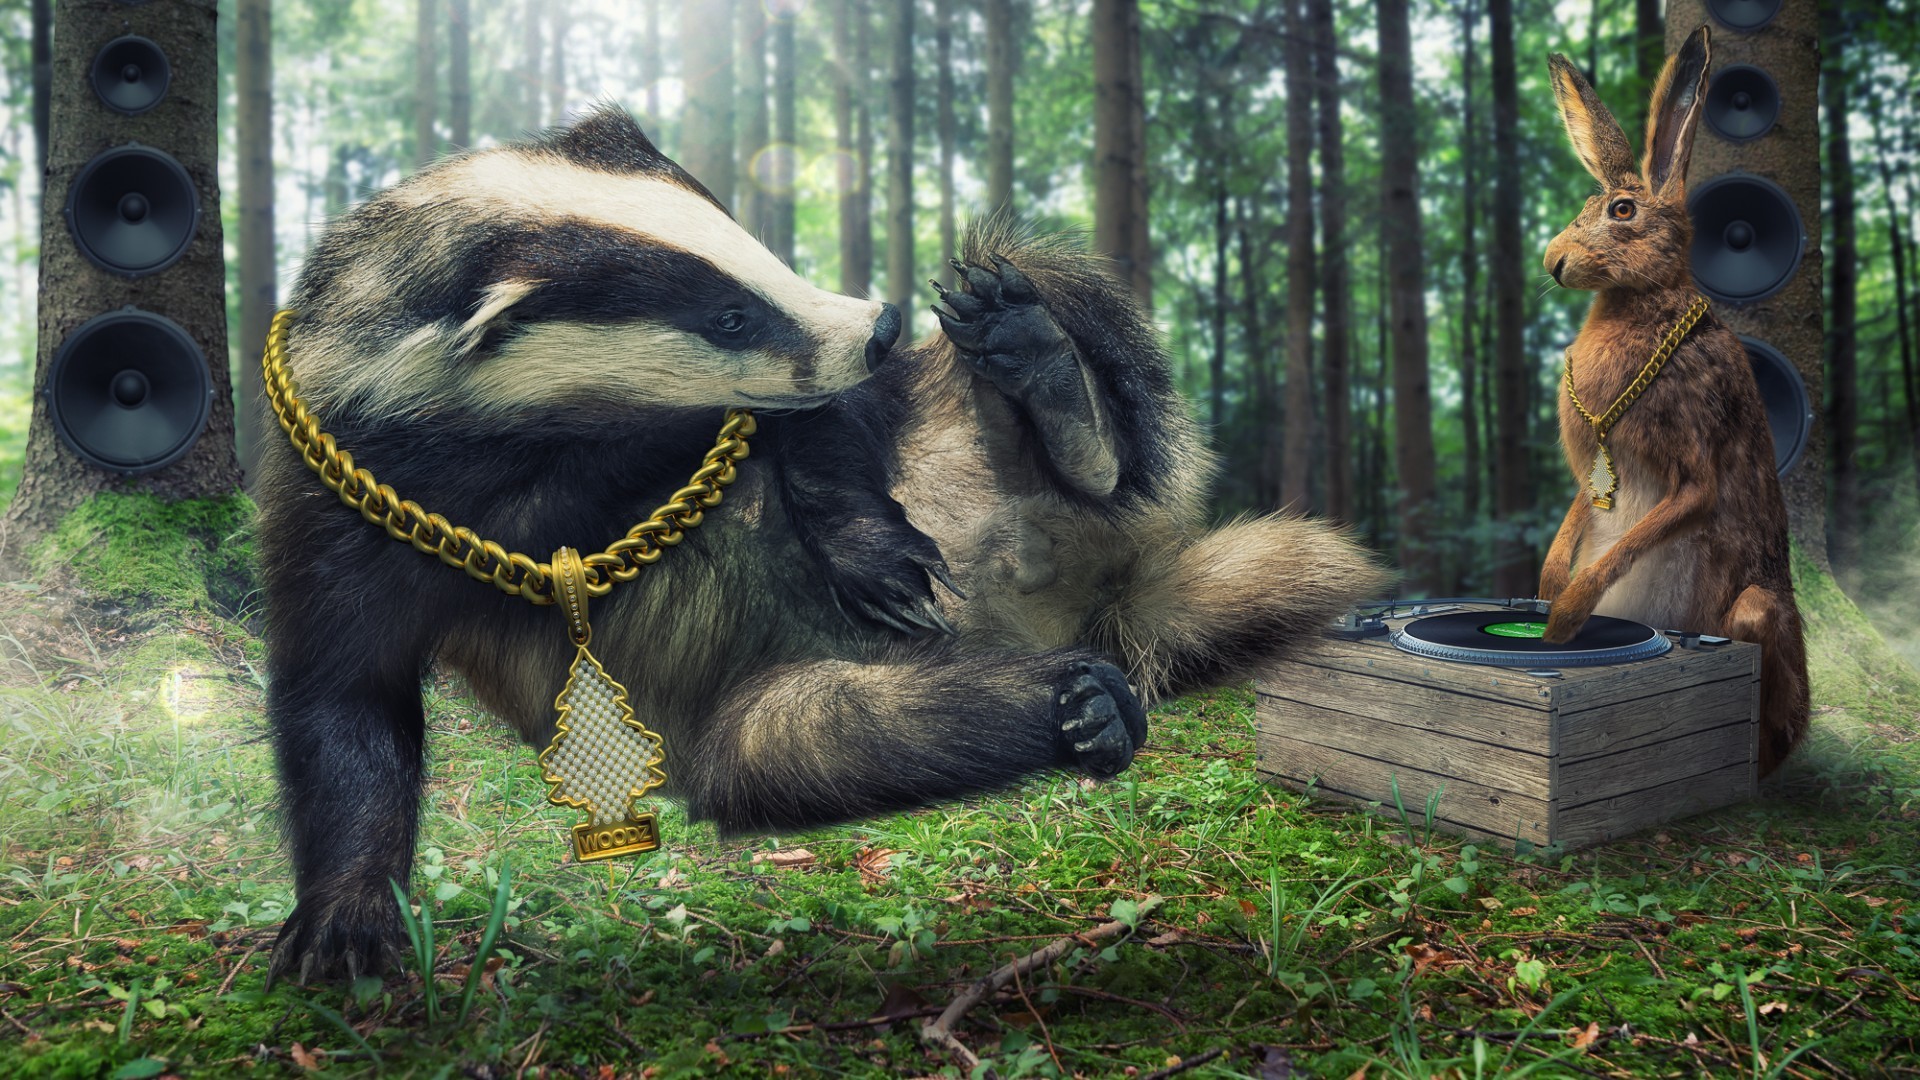 Humor Photoshop Creativity Digital Art Nature Trees Forest Rabbits Badger Gold Chains Speakers Break 1920x1080